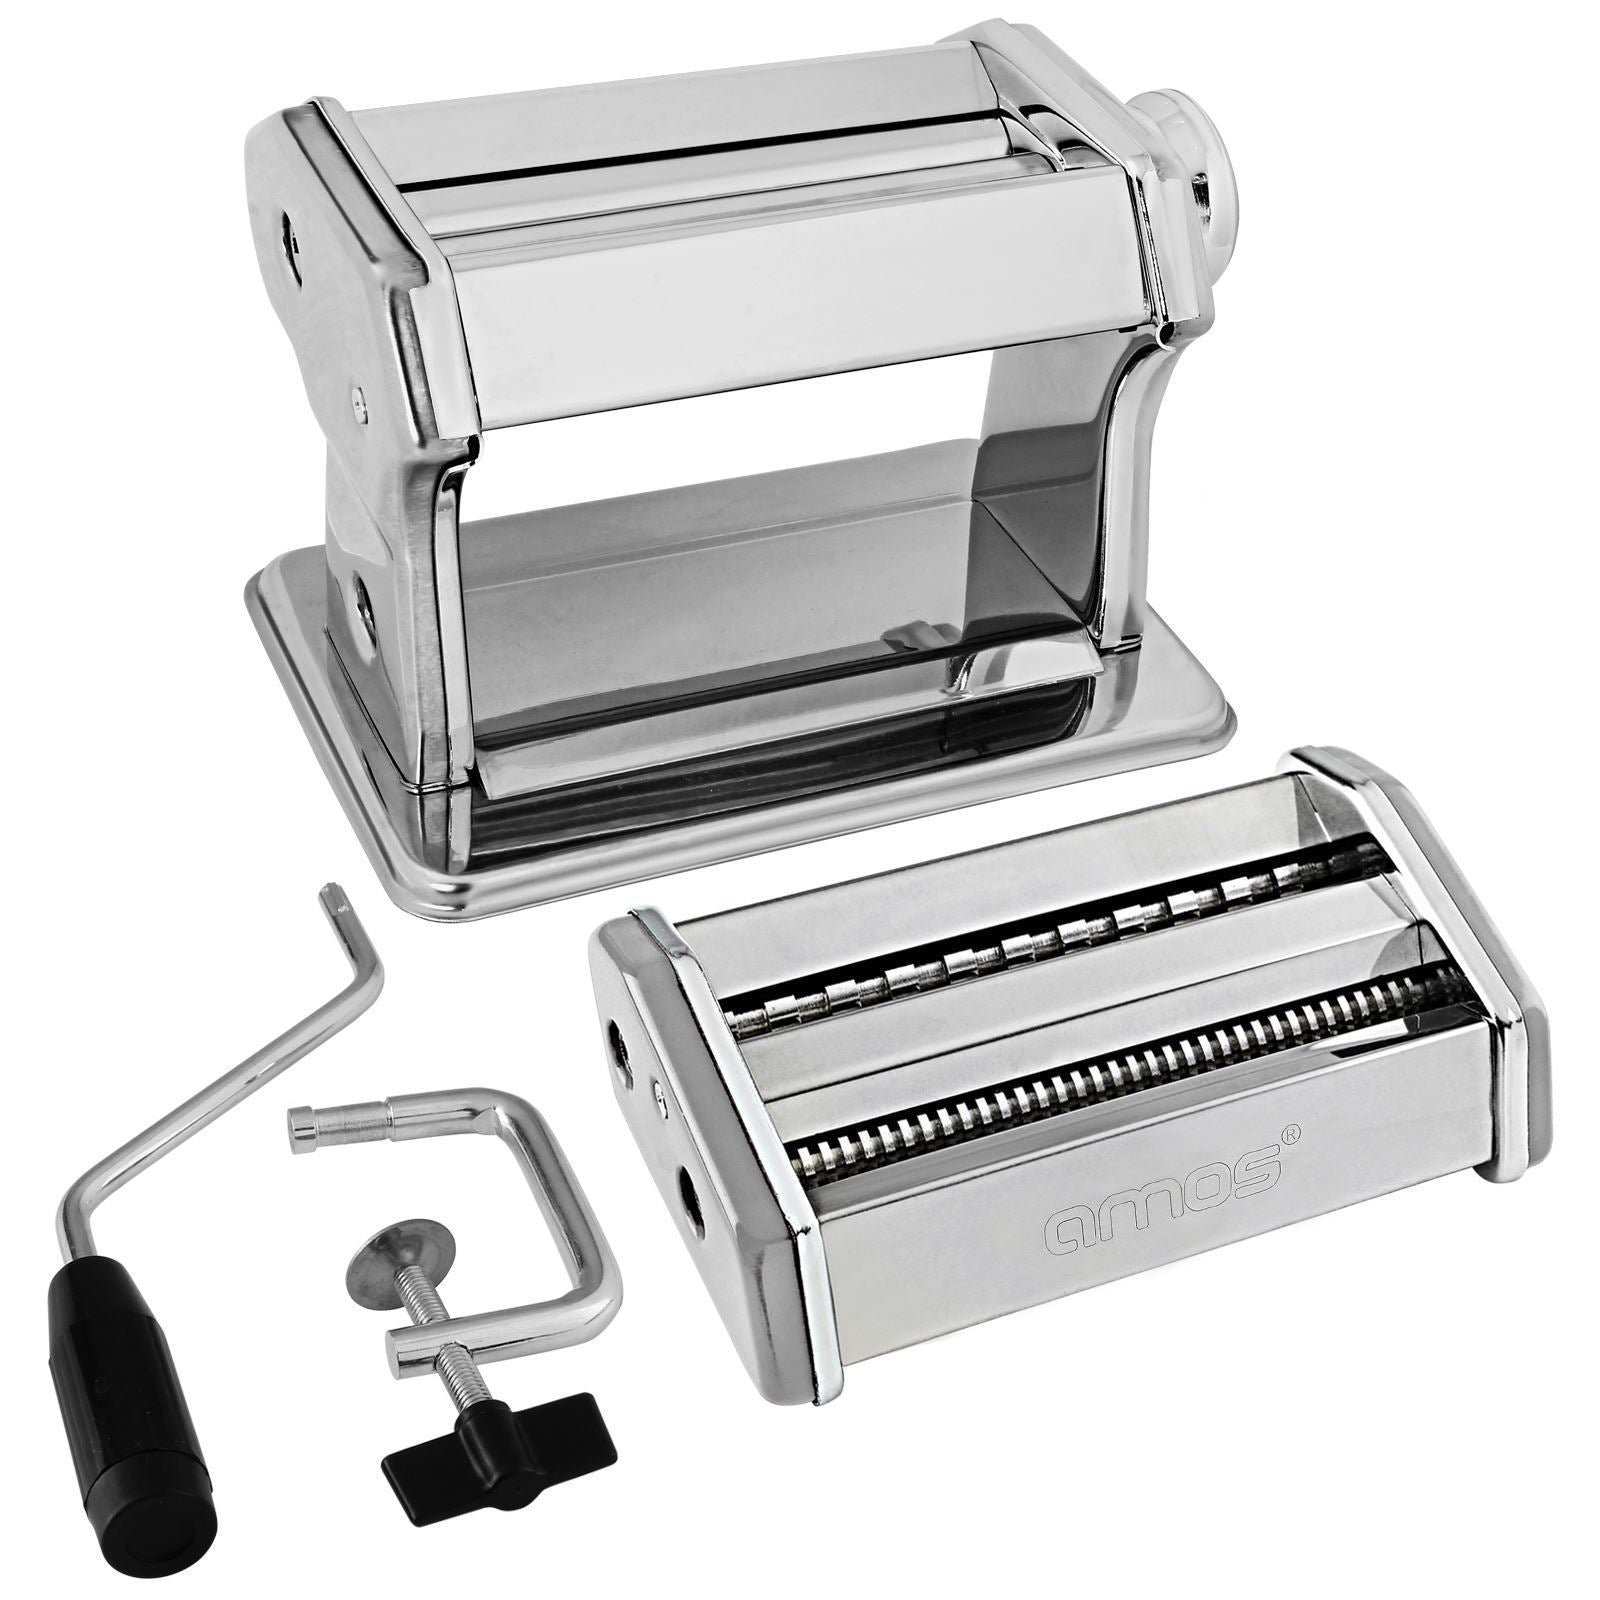 AMOS 3 in 1 Stainless Steel Pasta Maker Machine Tagliatelle Lasagne Cutter Kitchen Tool 